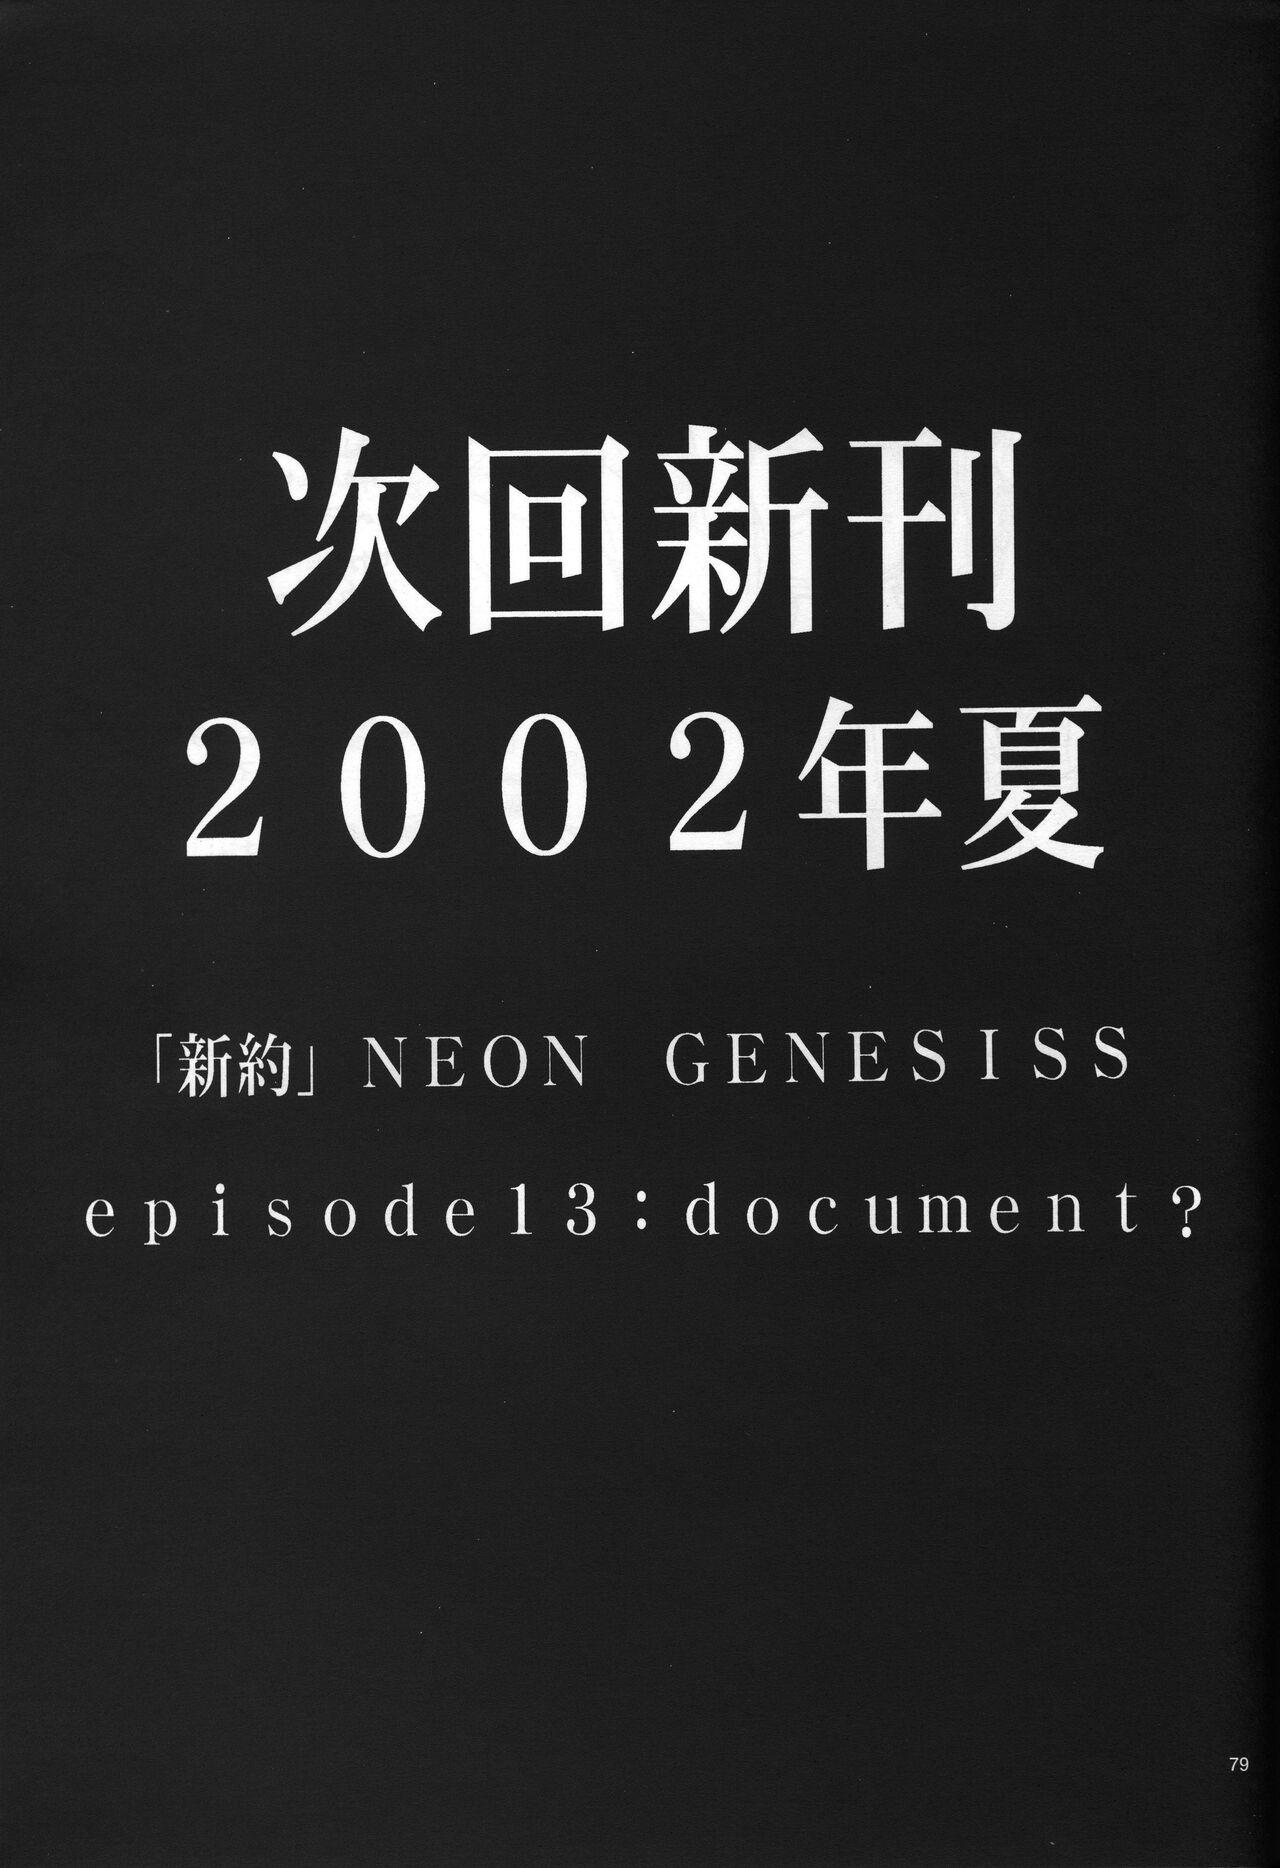 <New Testament> neon genesis documentＡ Episode 0:13-1 79